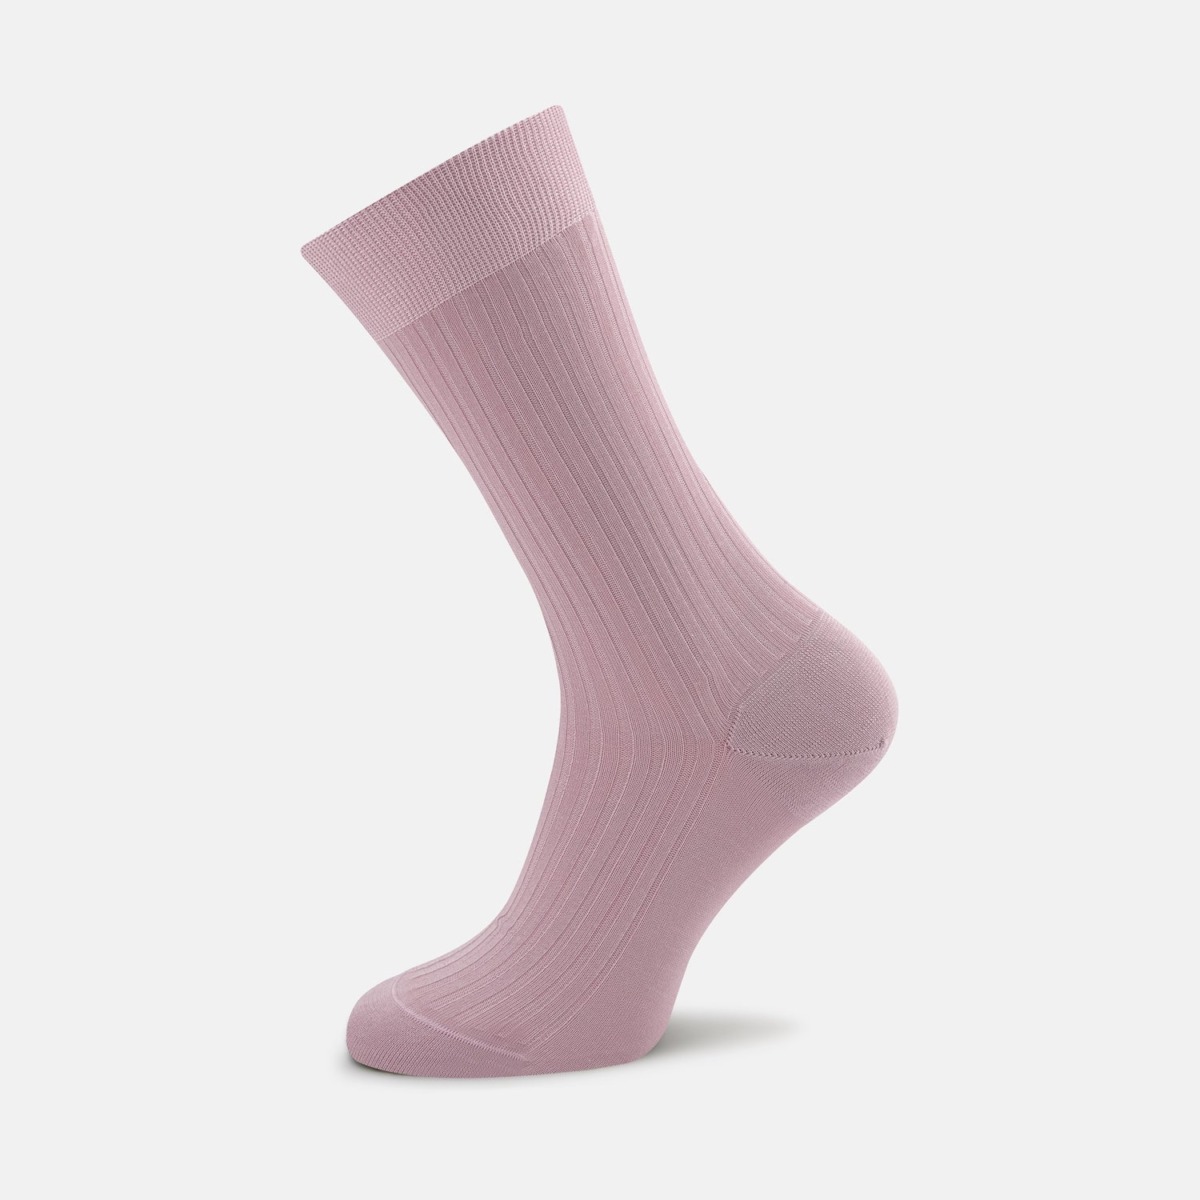 Turnbull & Asser - Gents Socks Pink Turnbull And Asser GOOFASH